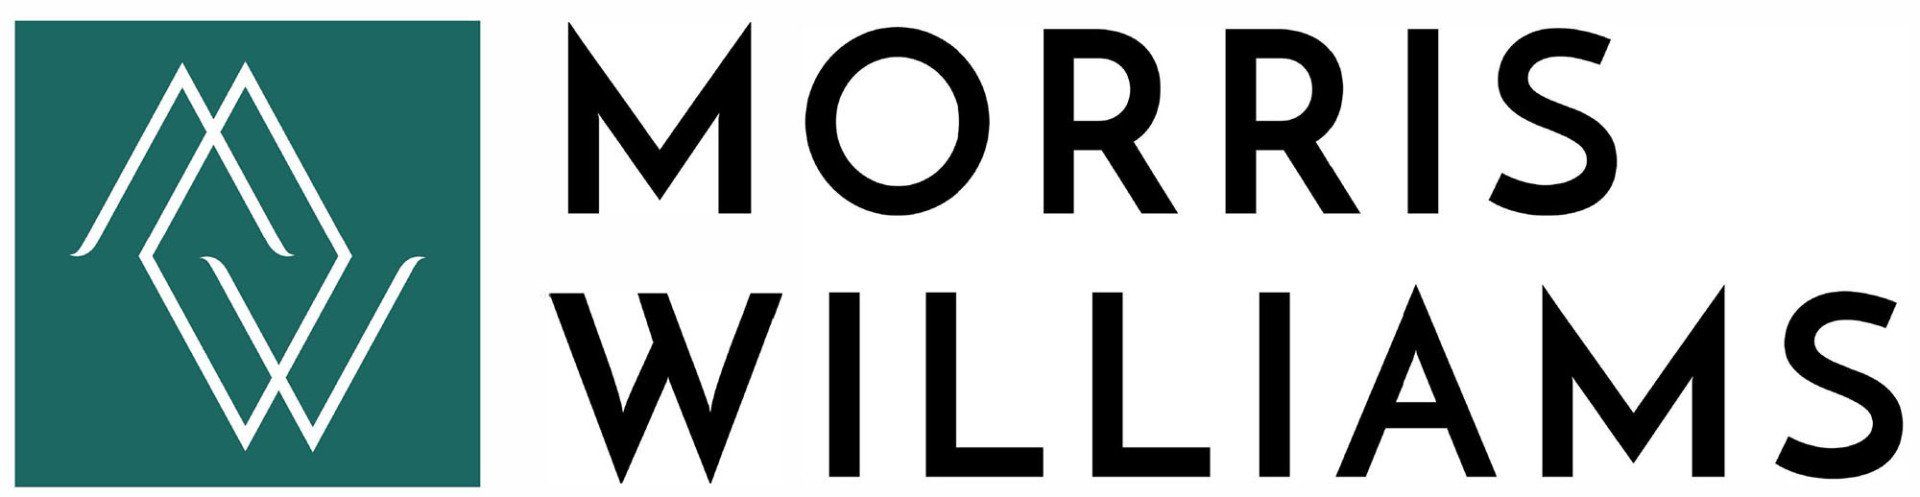 Morris Williams LLC logo